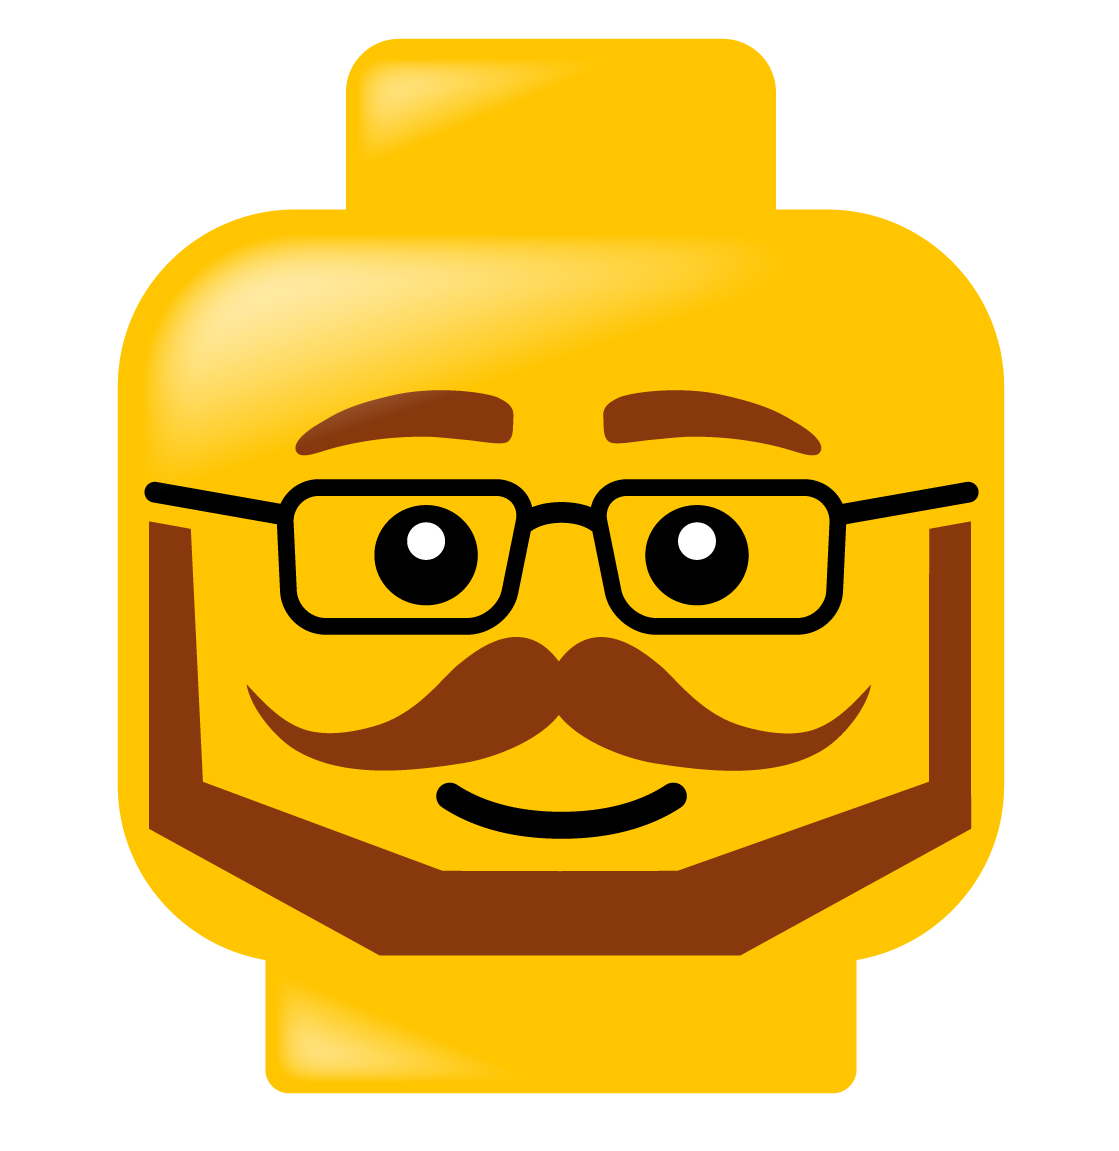 Lego head illustration of me. 